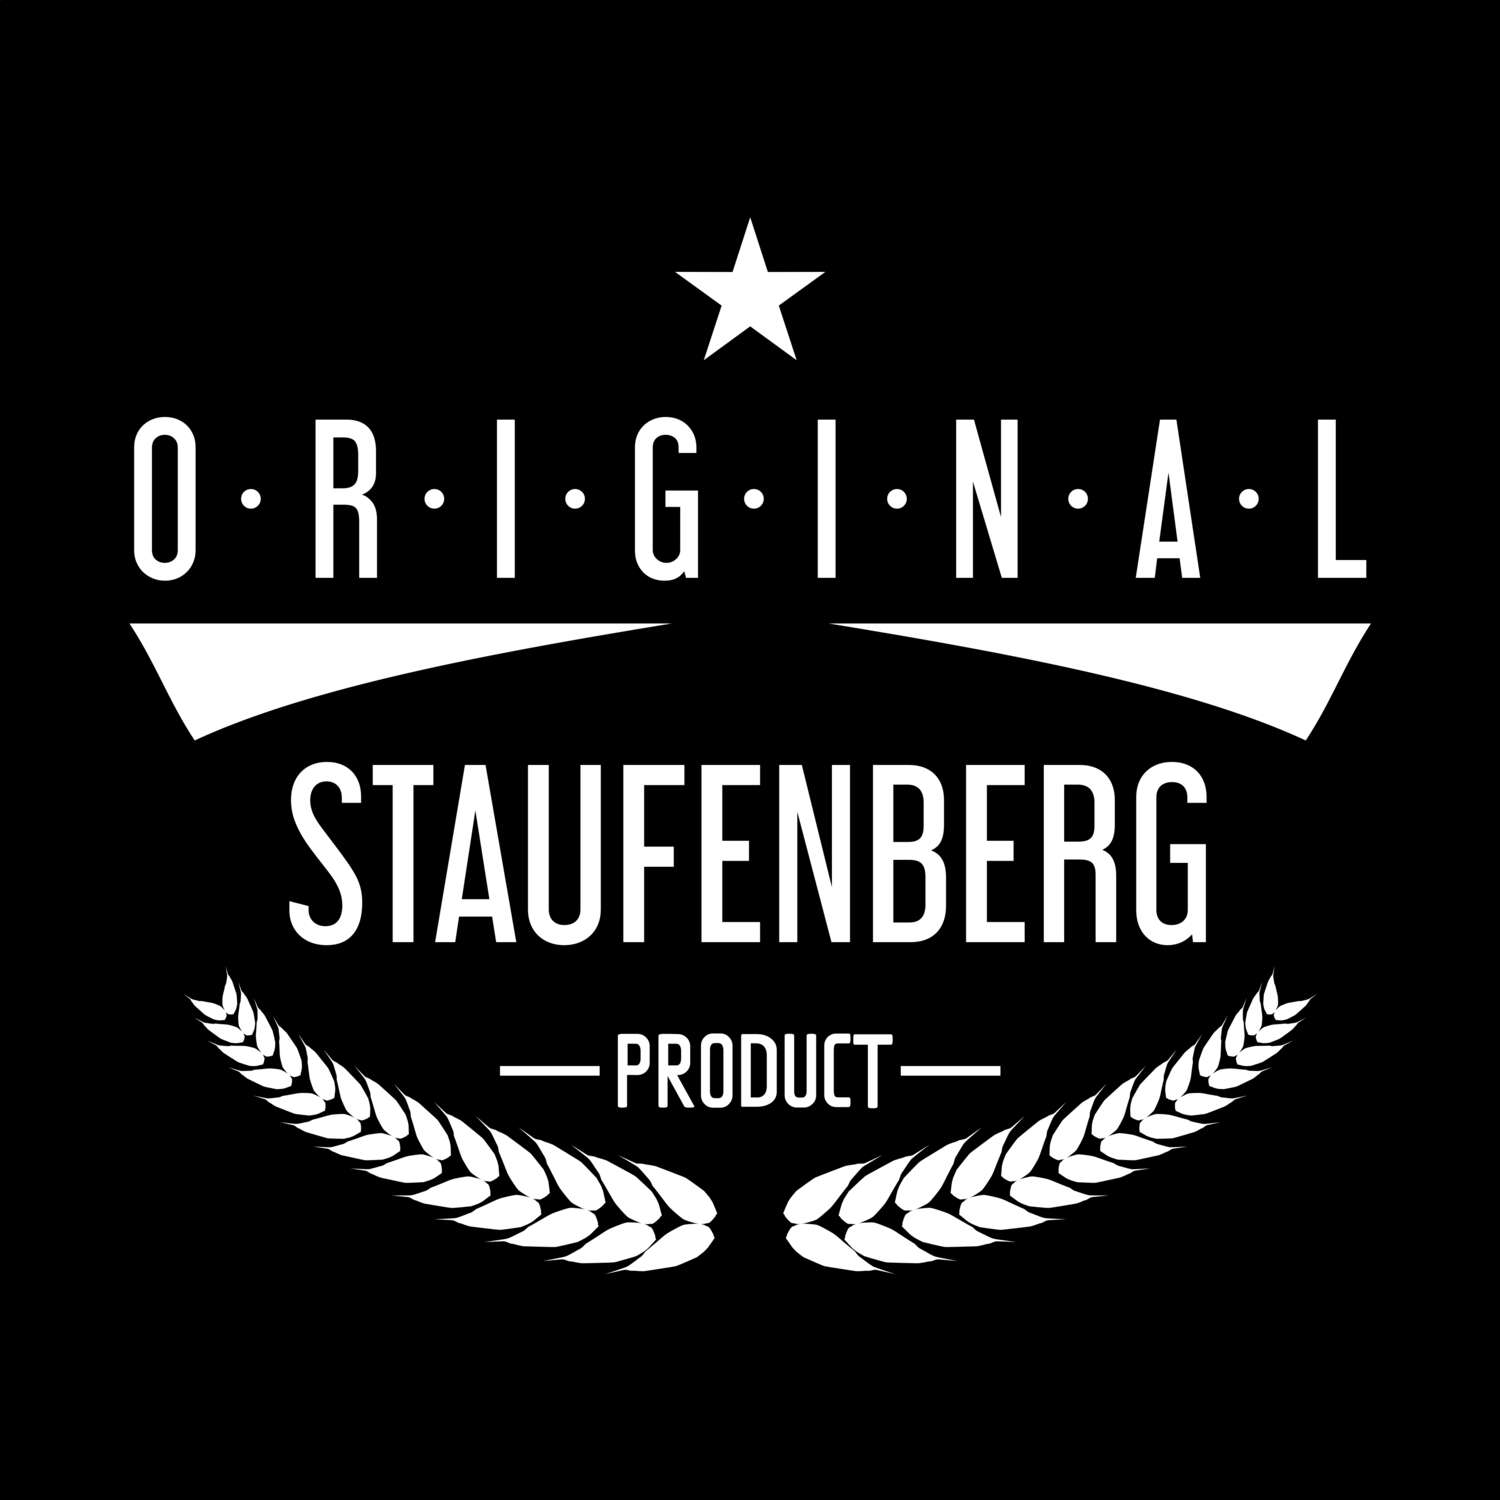 Staufenberg T-Shirt »Original Product«